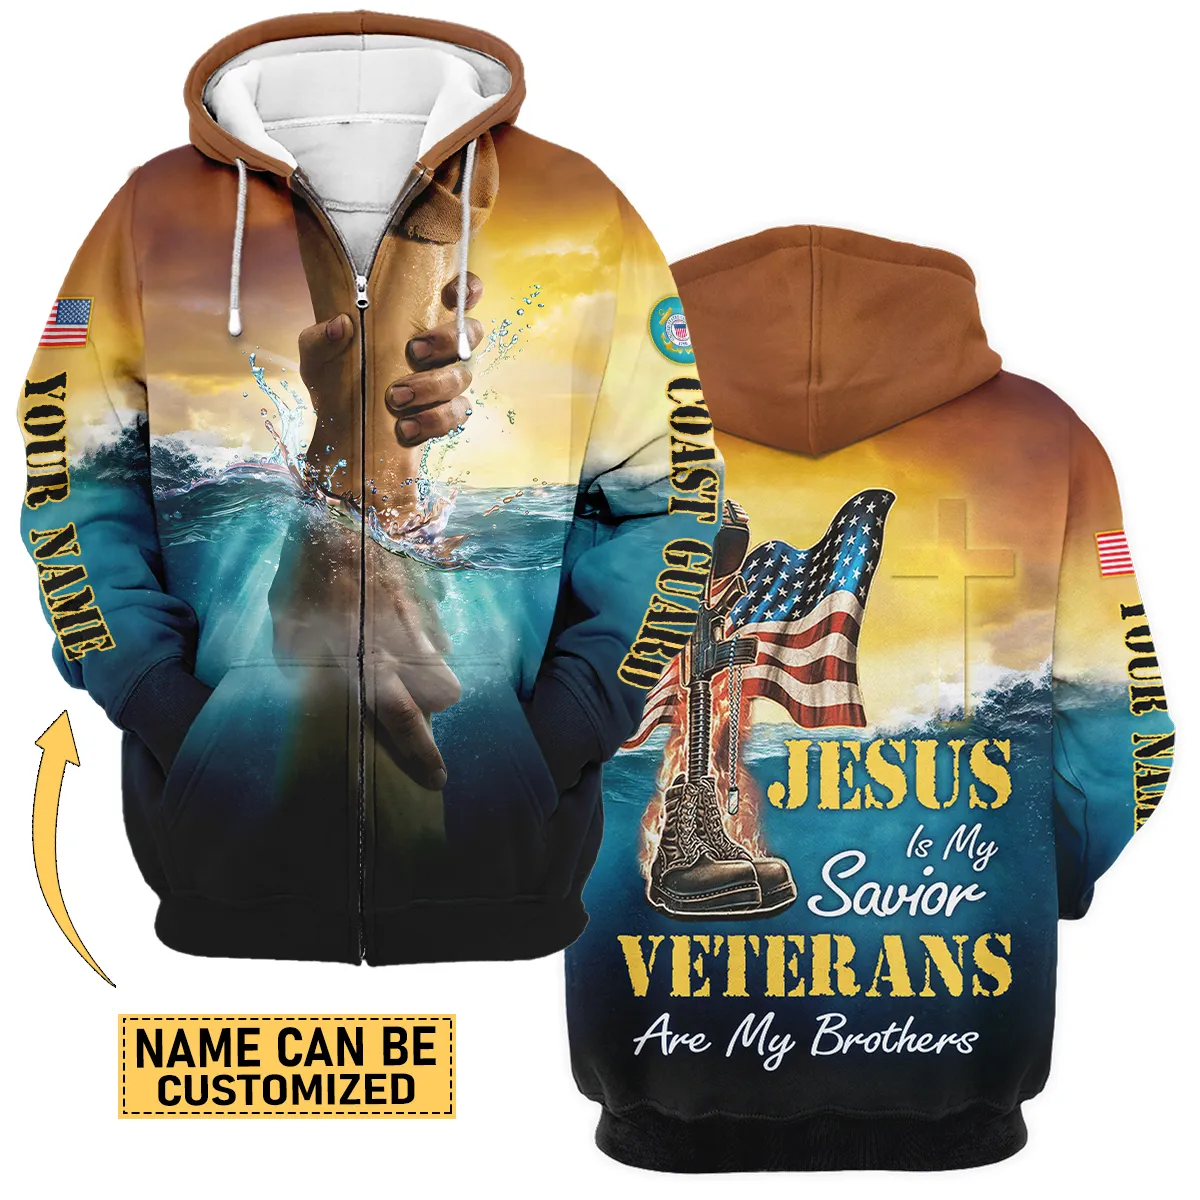 Jesus Is My Savior Veterans Are My Brothers Custom Name U.S. Coast Guard All Over Prints Oversized Hawaiian Shirt